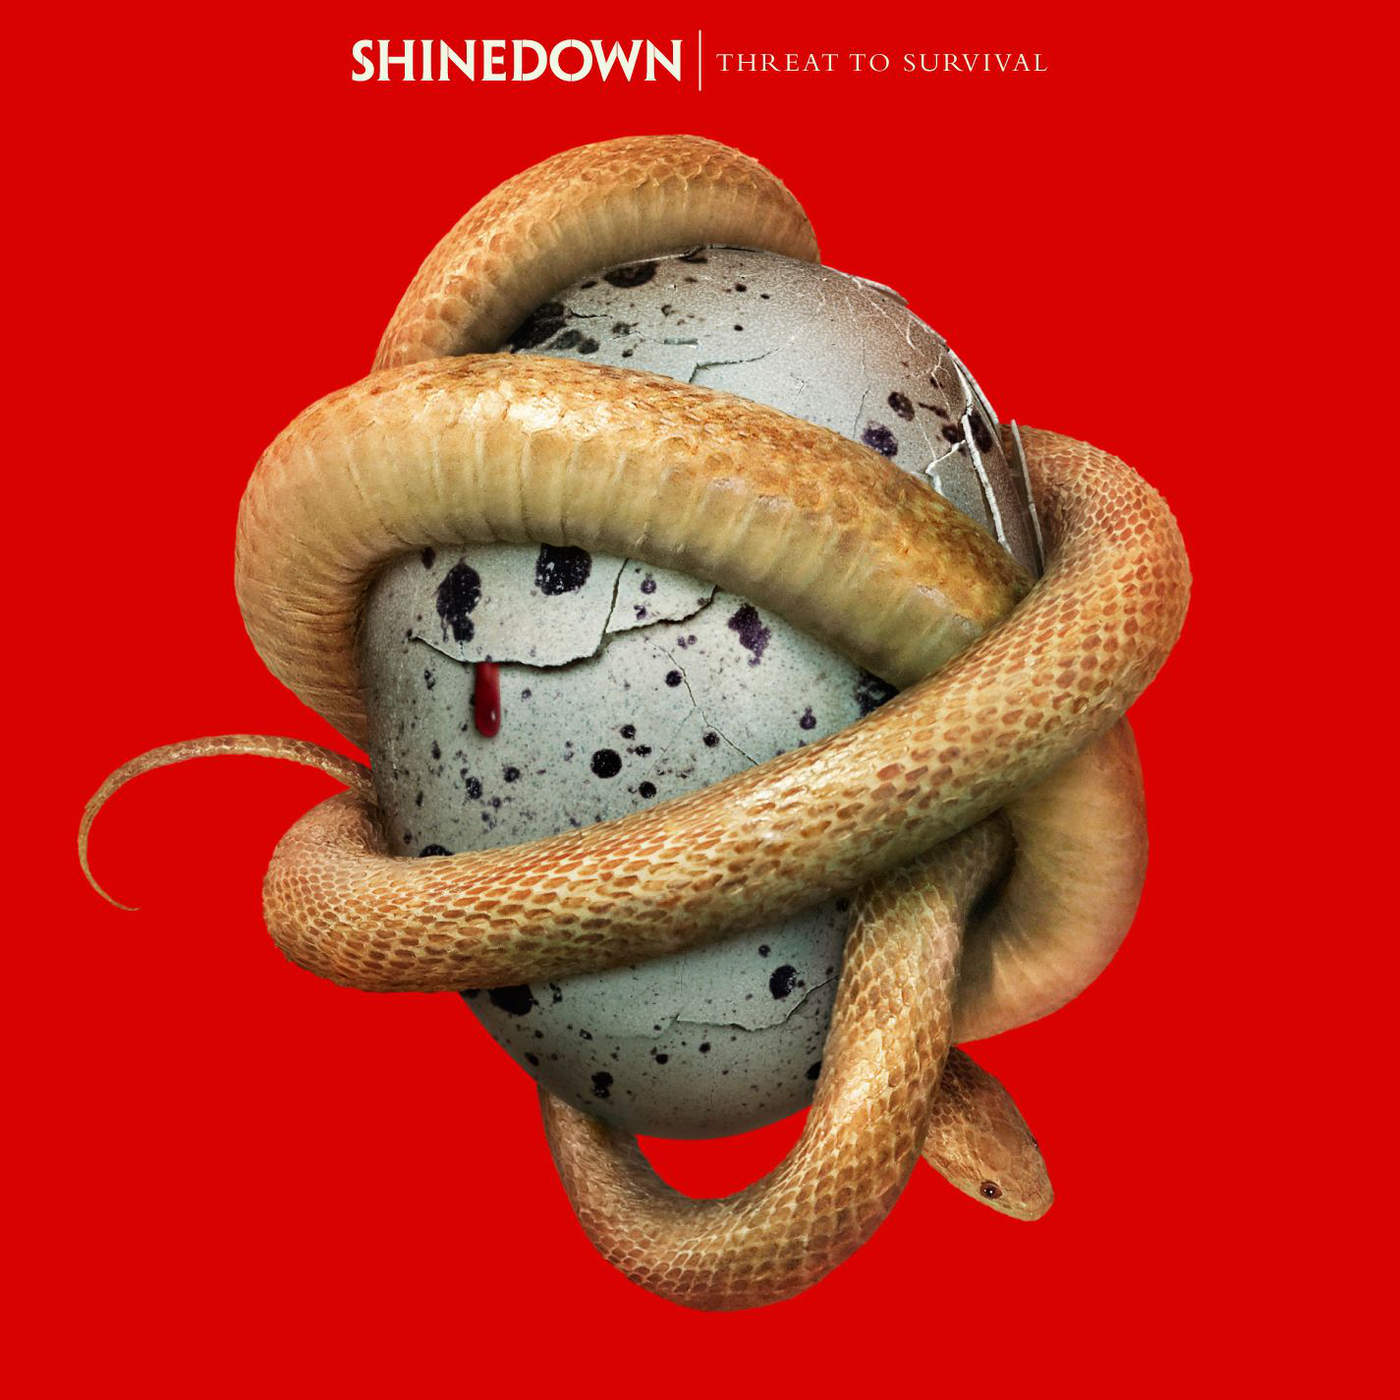 Shinedown - Threat to Survival (2015) Album Info